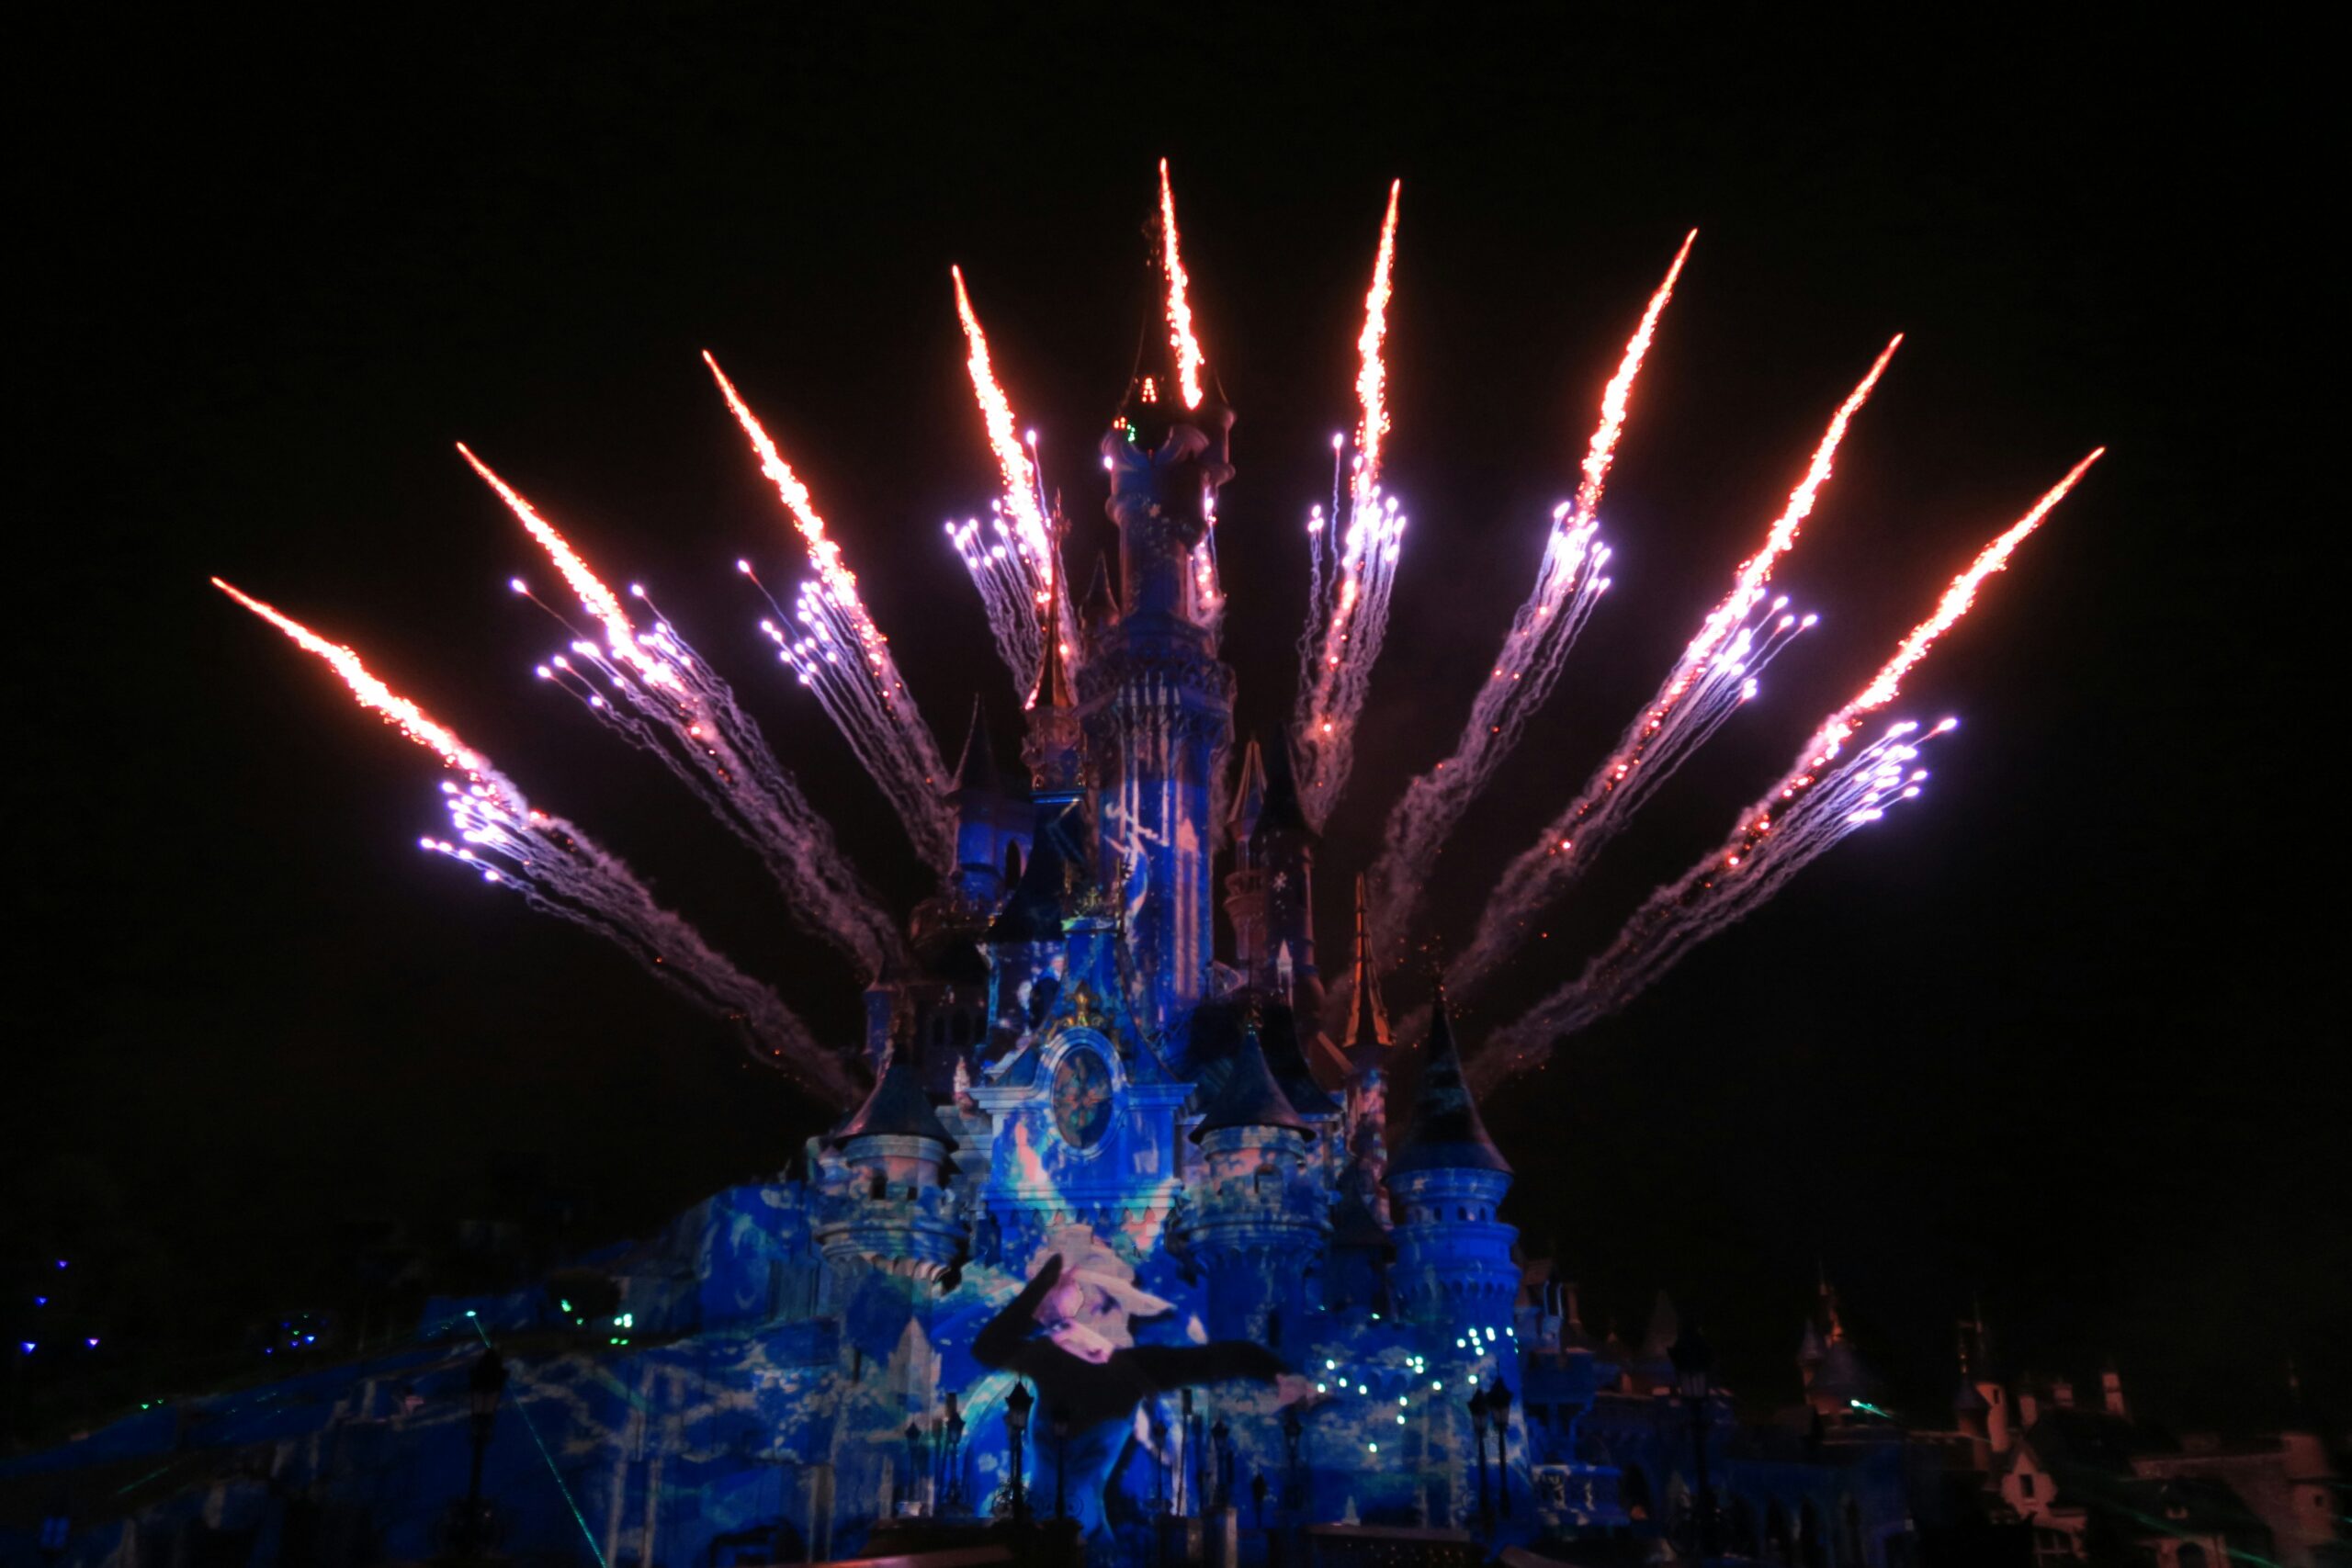 Fireworks over Sleeping Beauty Castle